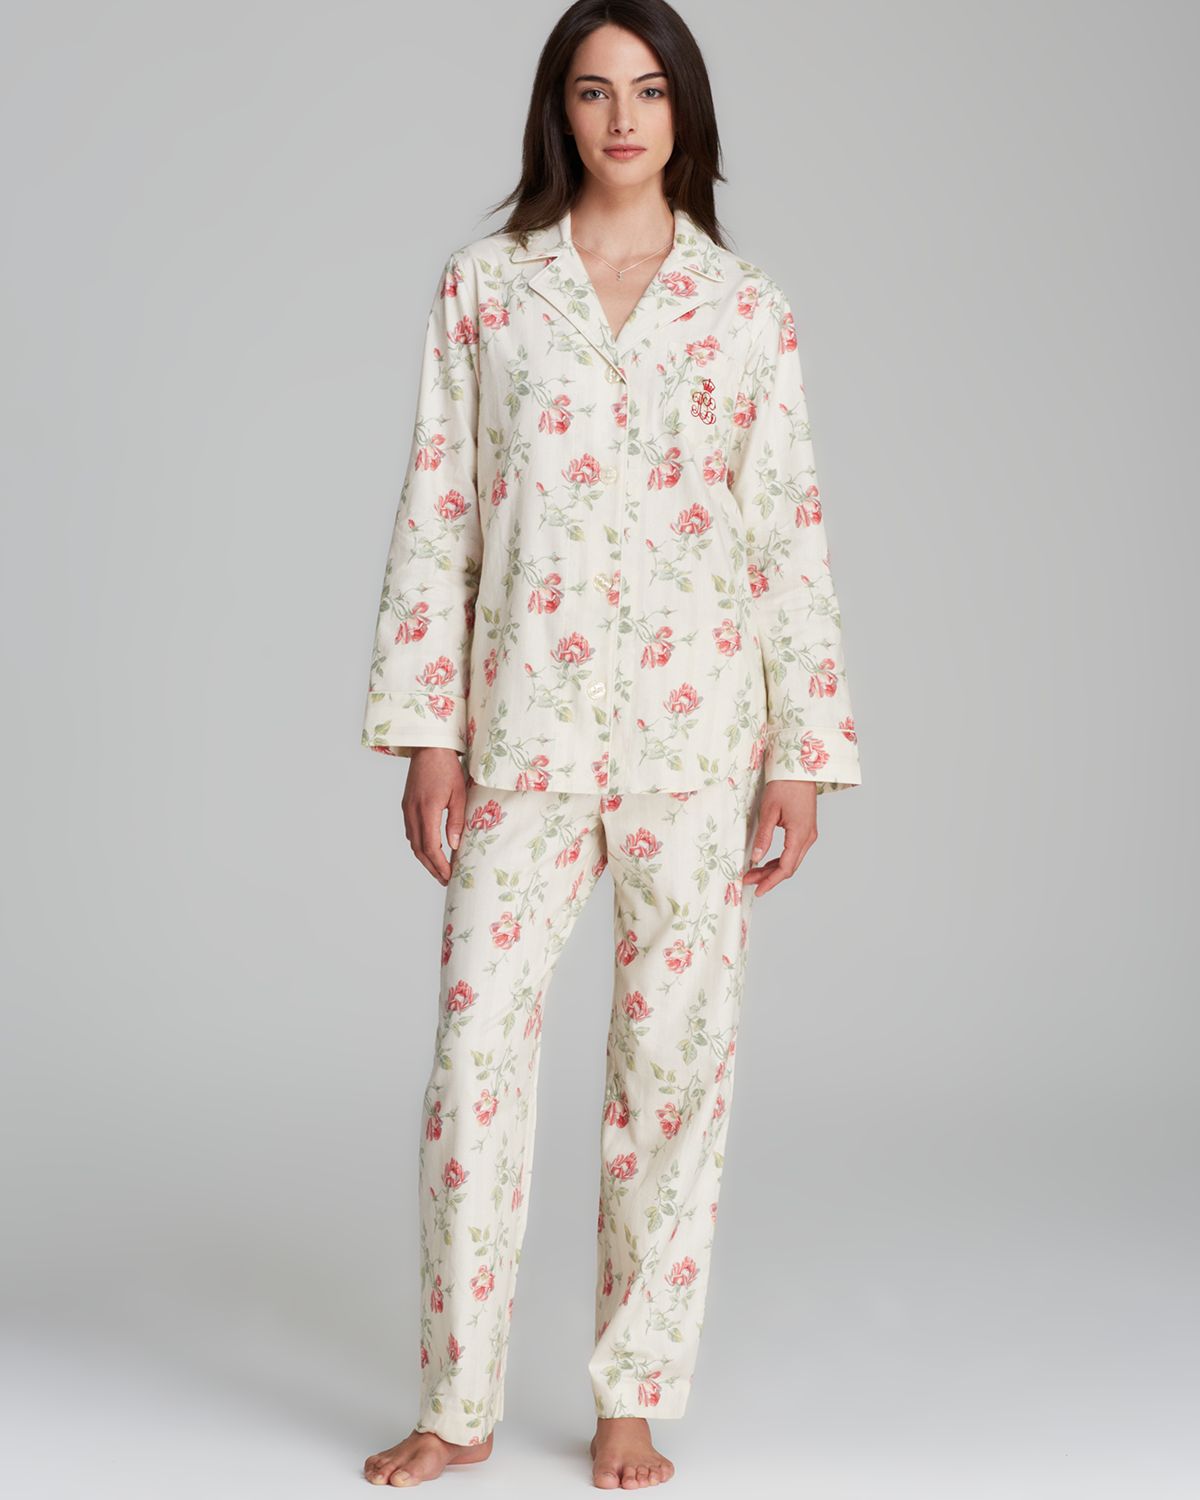 Ralph lauren Brushed Twill Lafayette Rose Pajama Set in Natural | Lyst